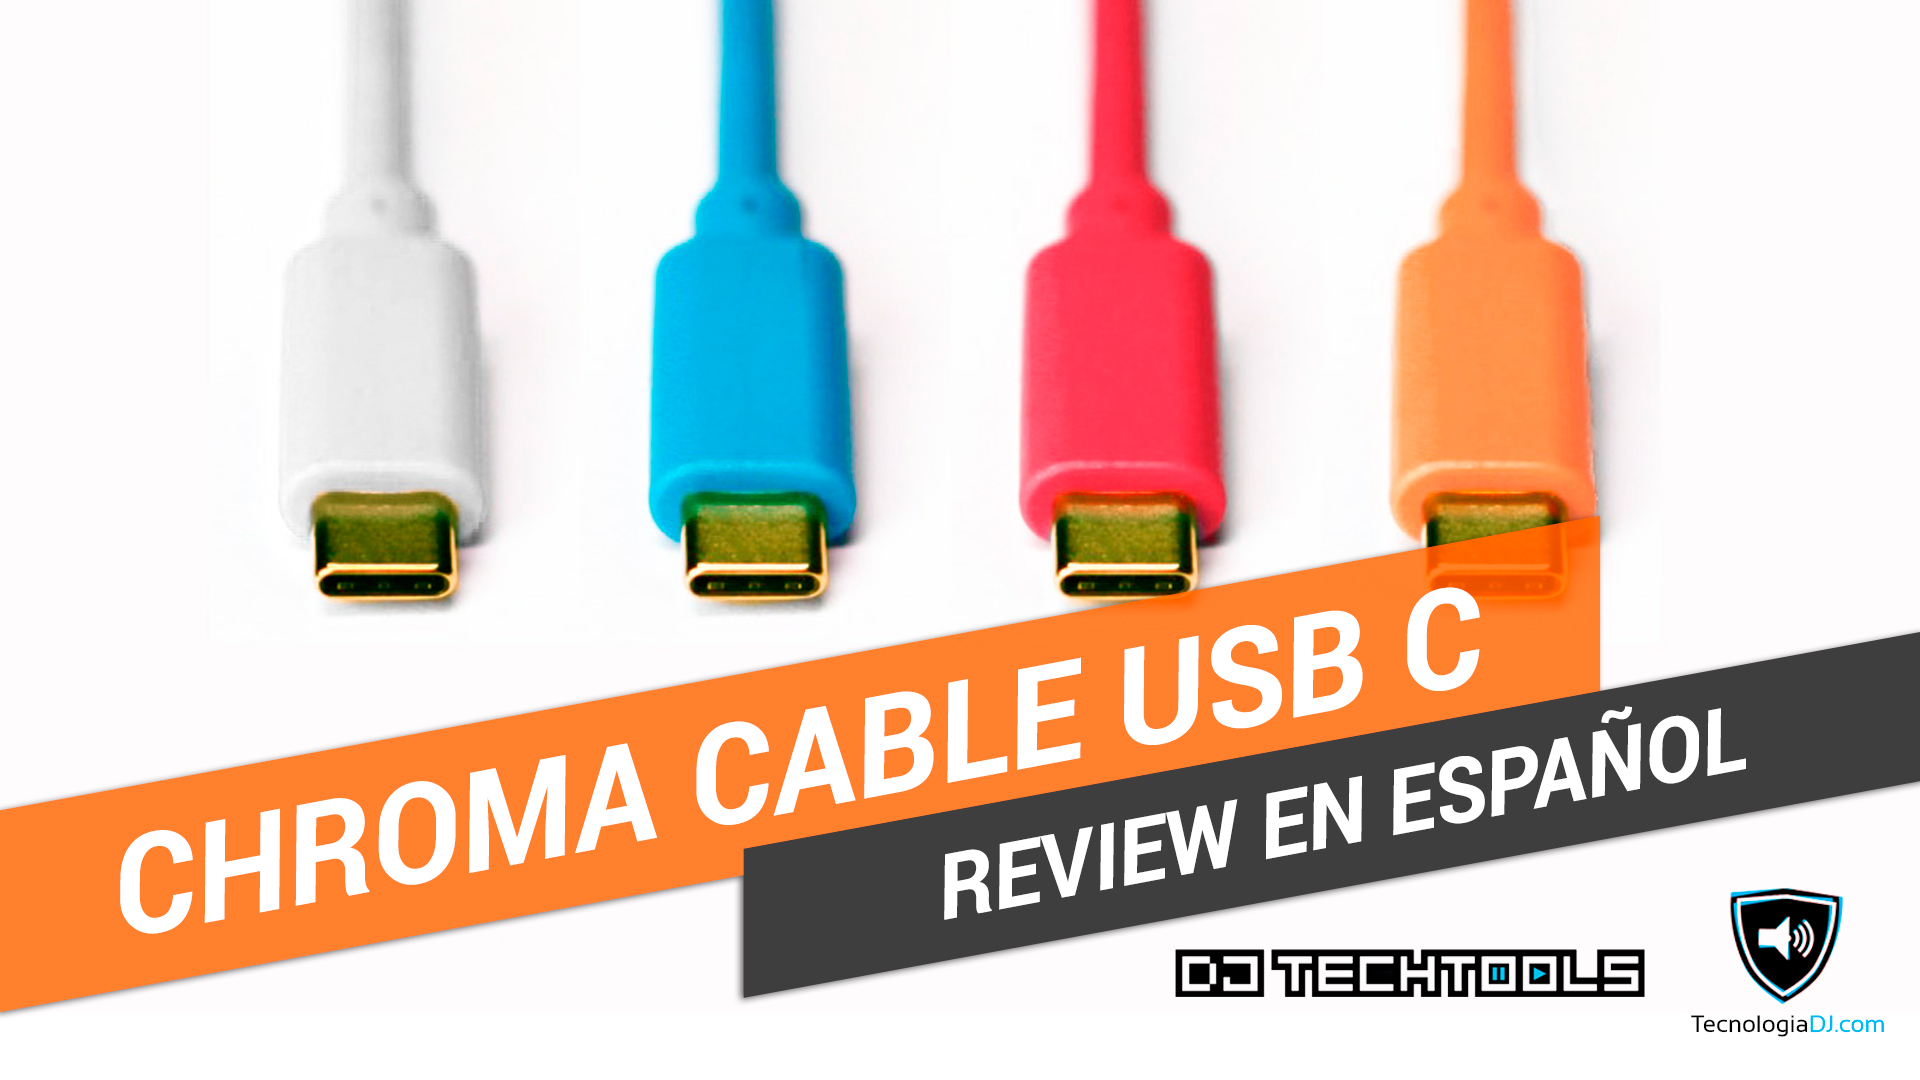 Review en español Chroma Cable USB C de DJ Tech Tools